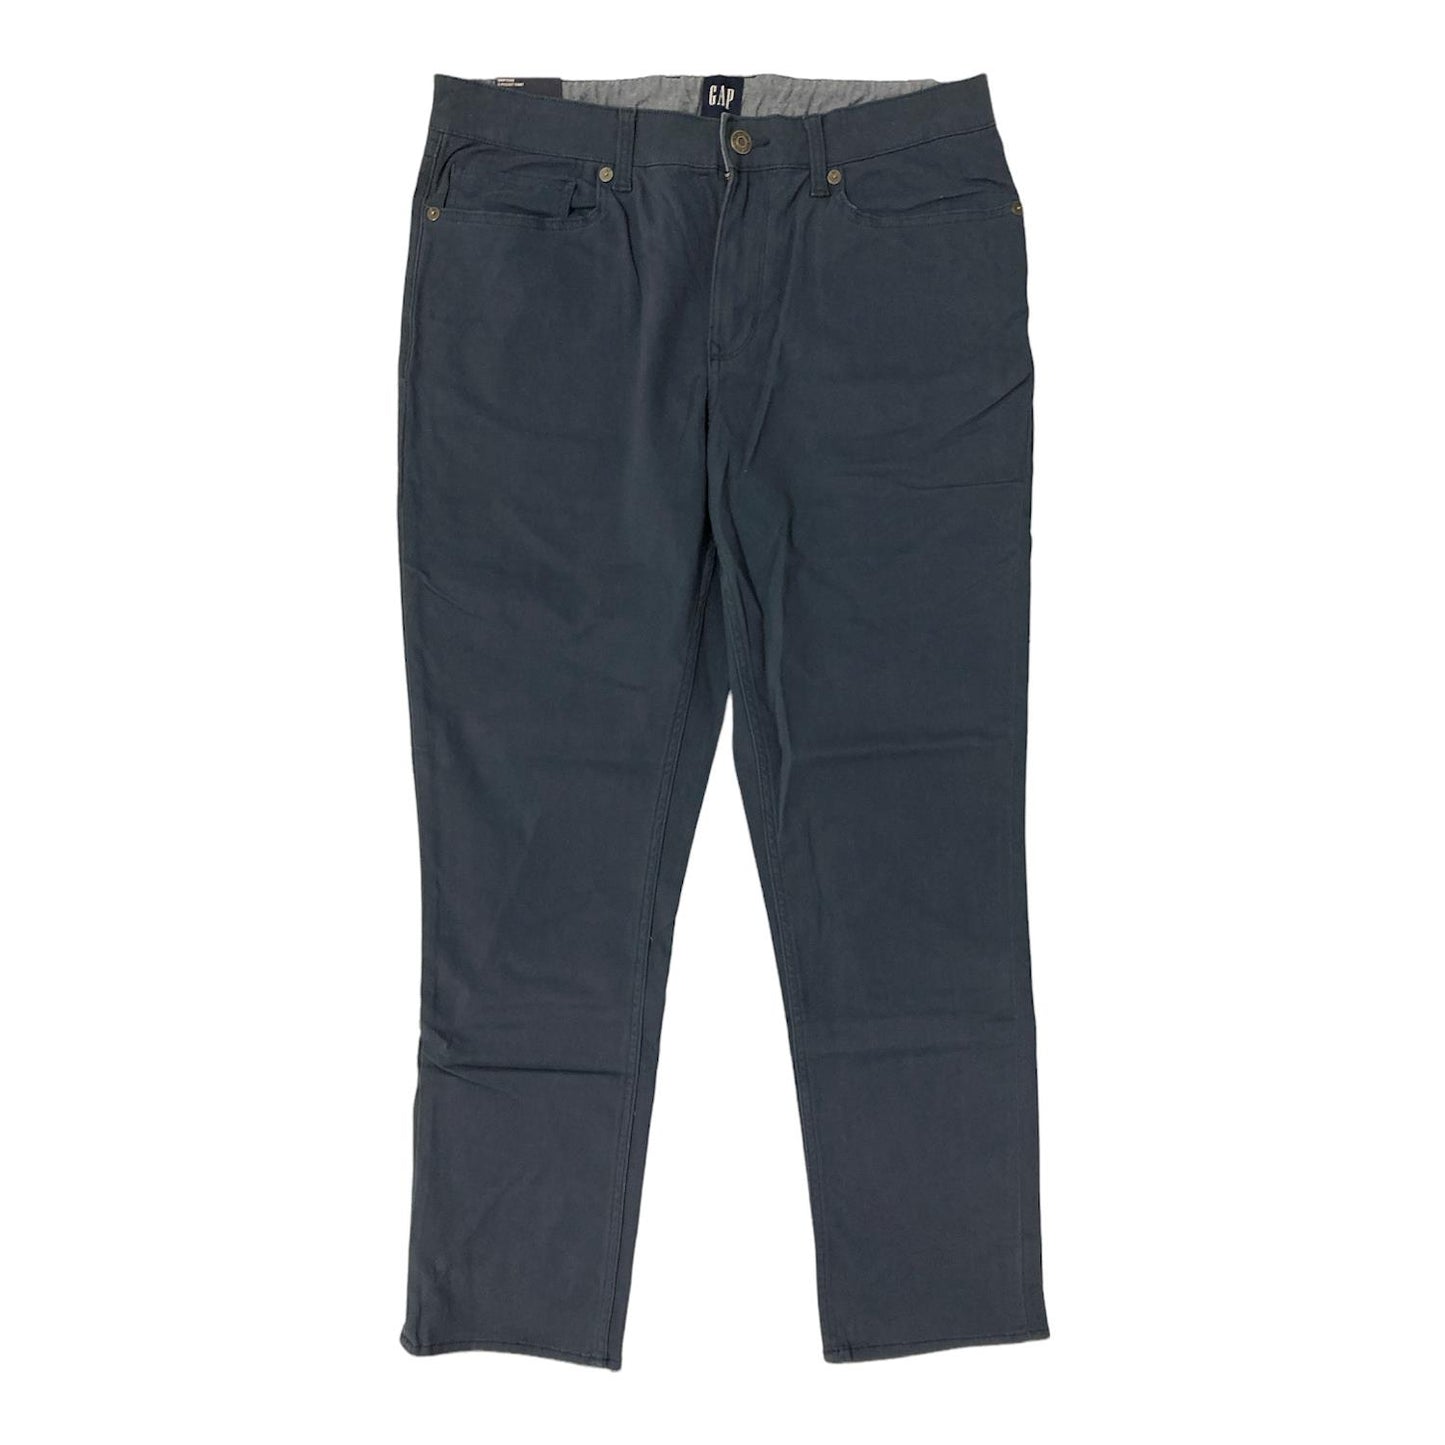 GAP Men's Super Soft Stretch Twill 5 Pocket Slim Fit Pants